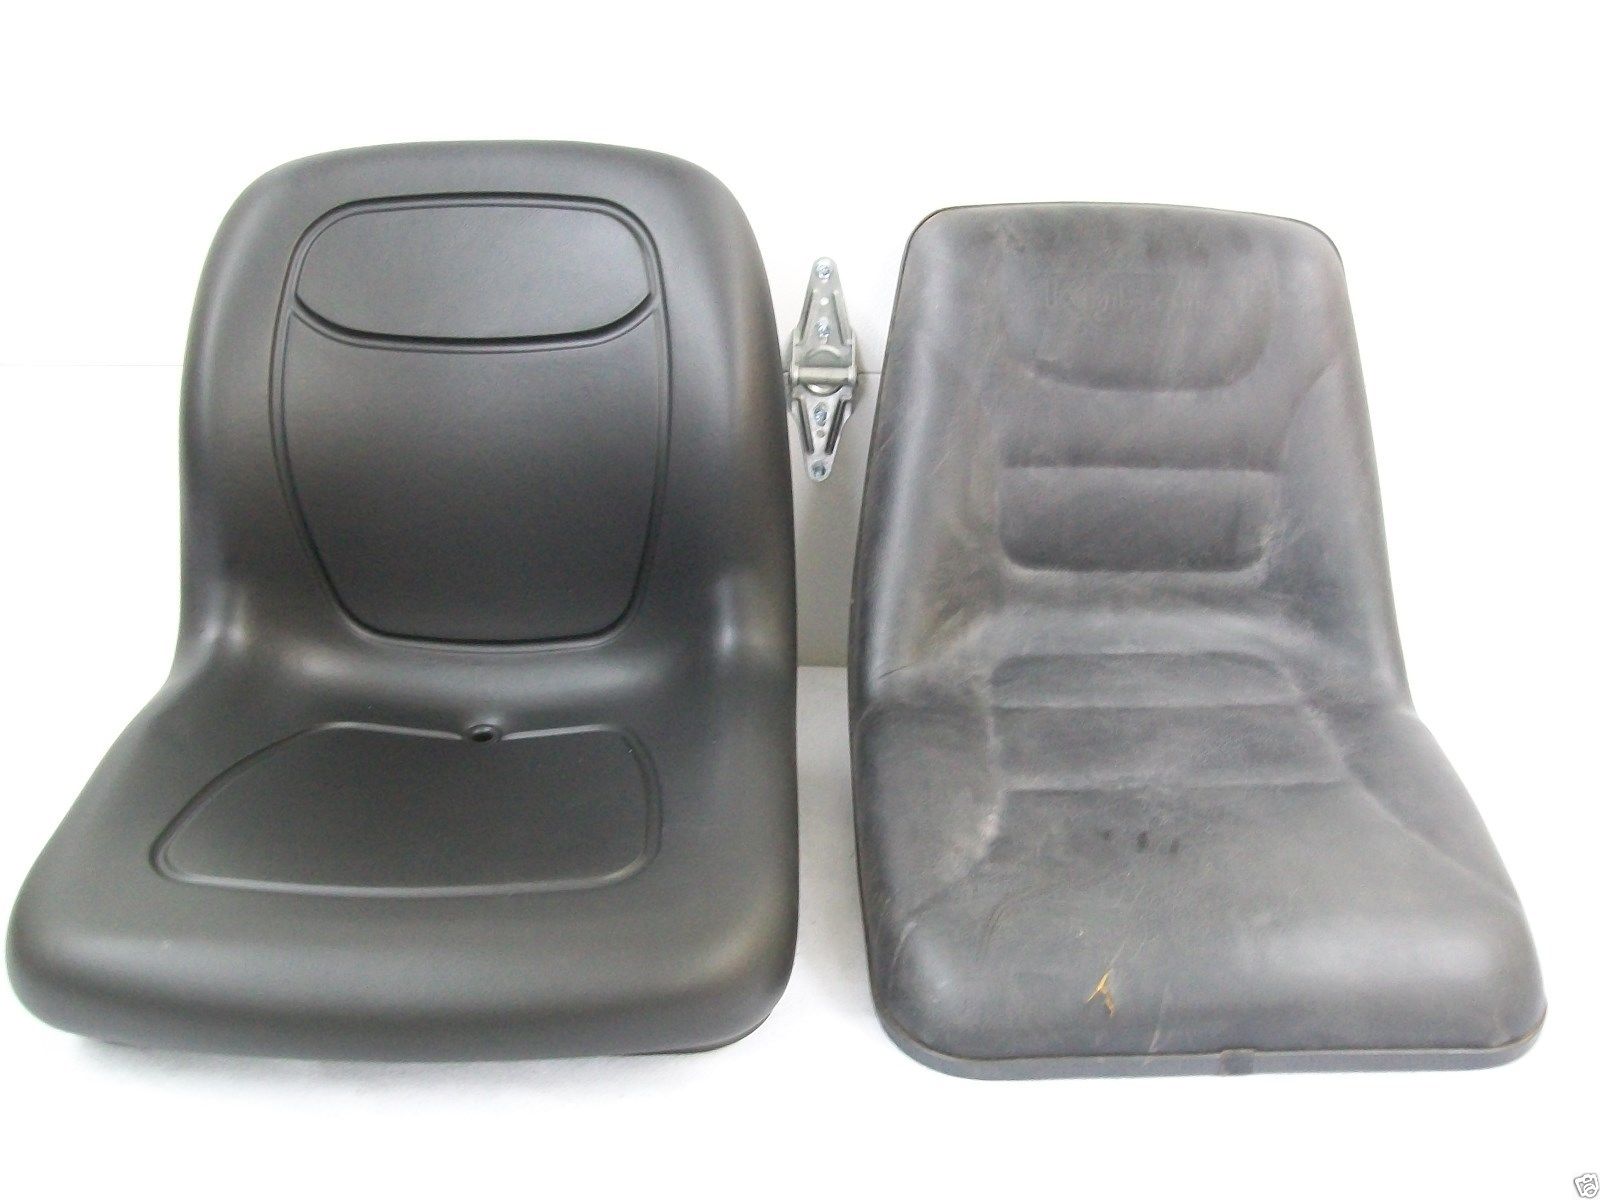 Kubota Tractor Seat Cover Velcromag.